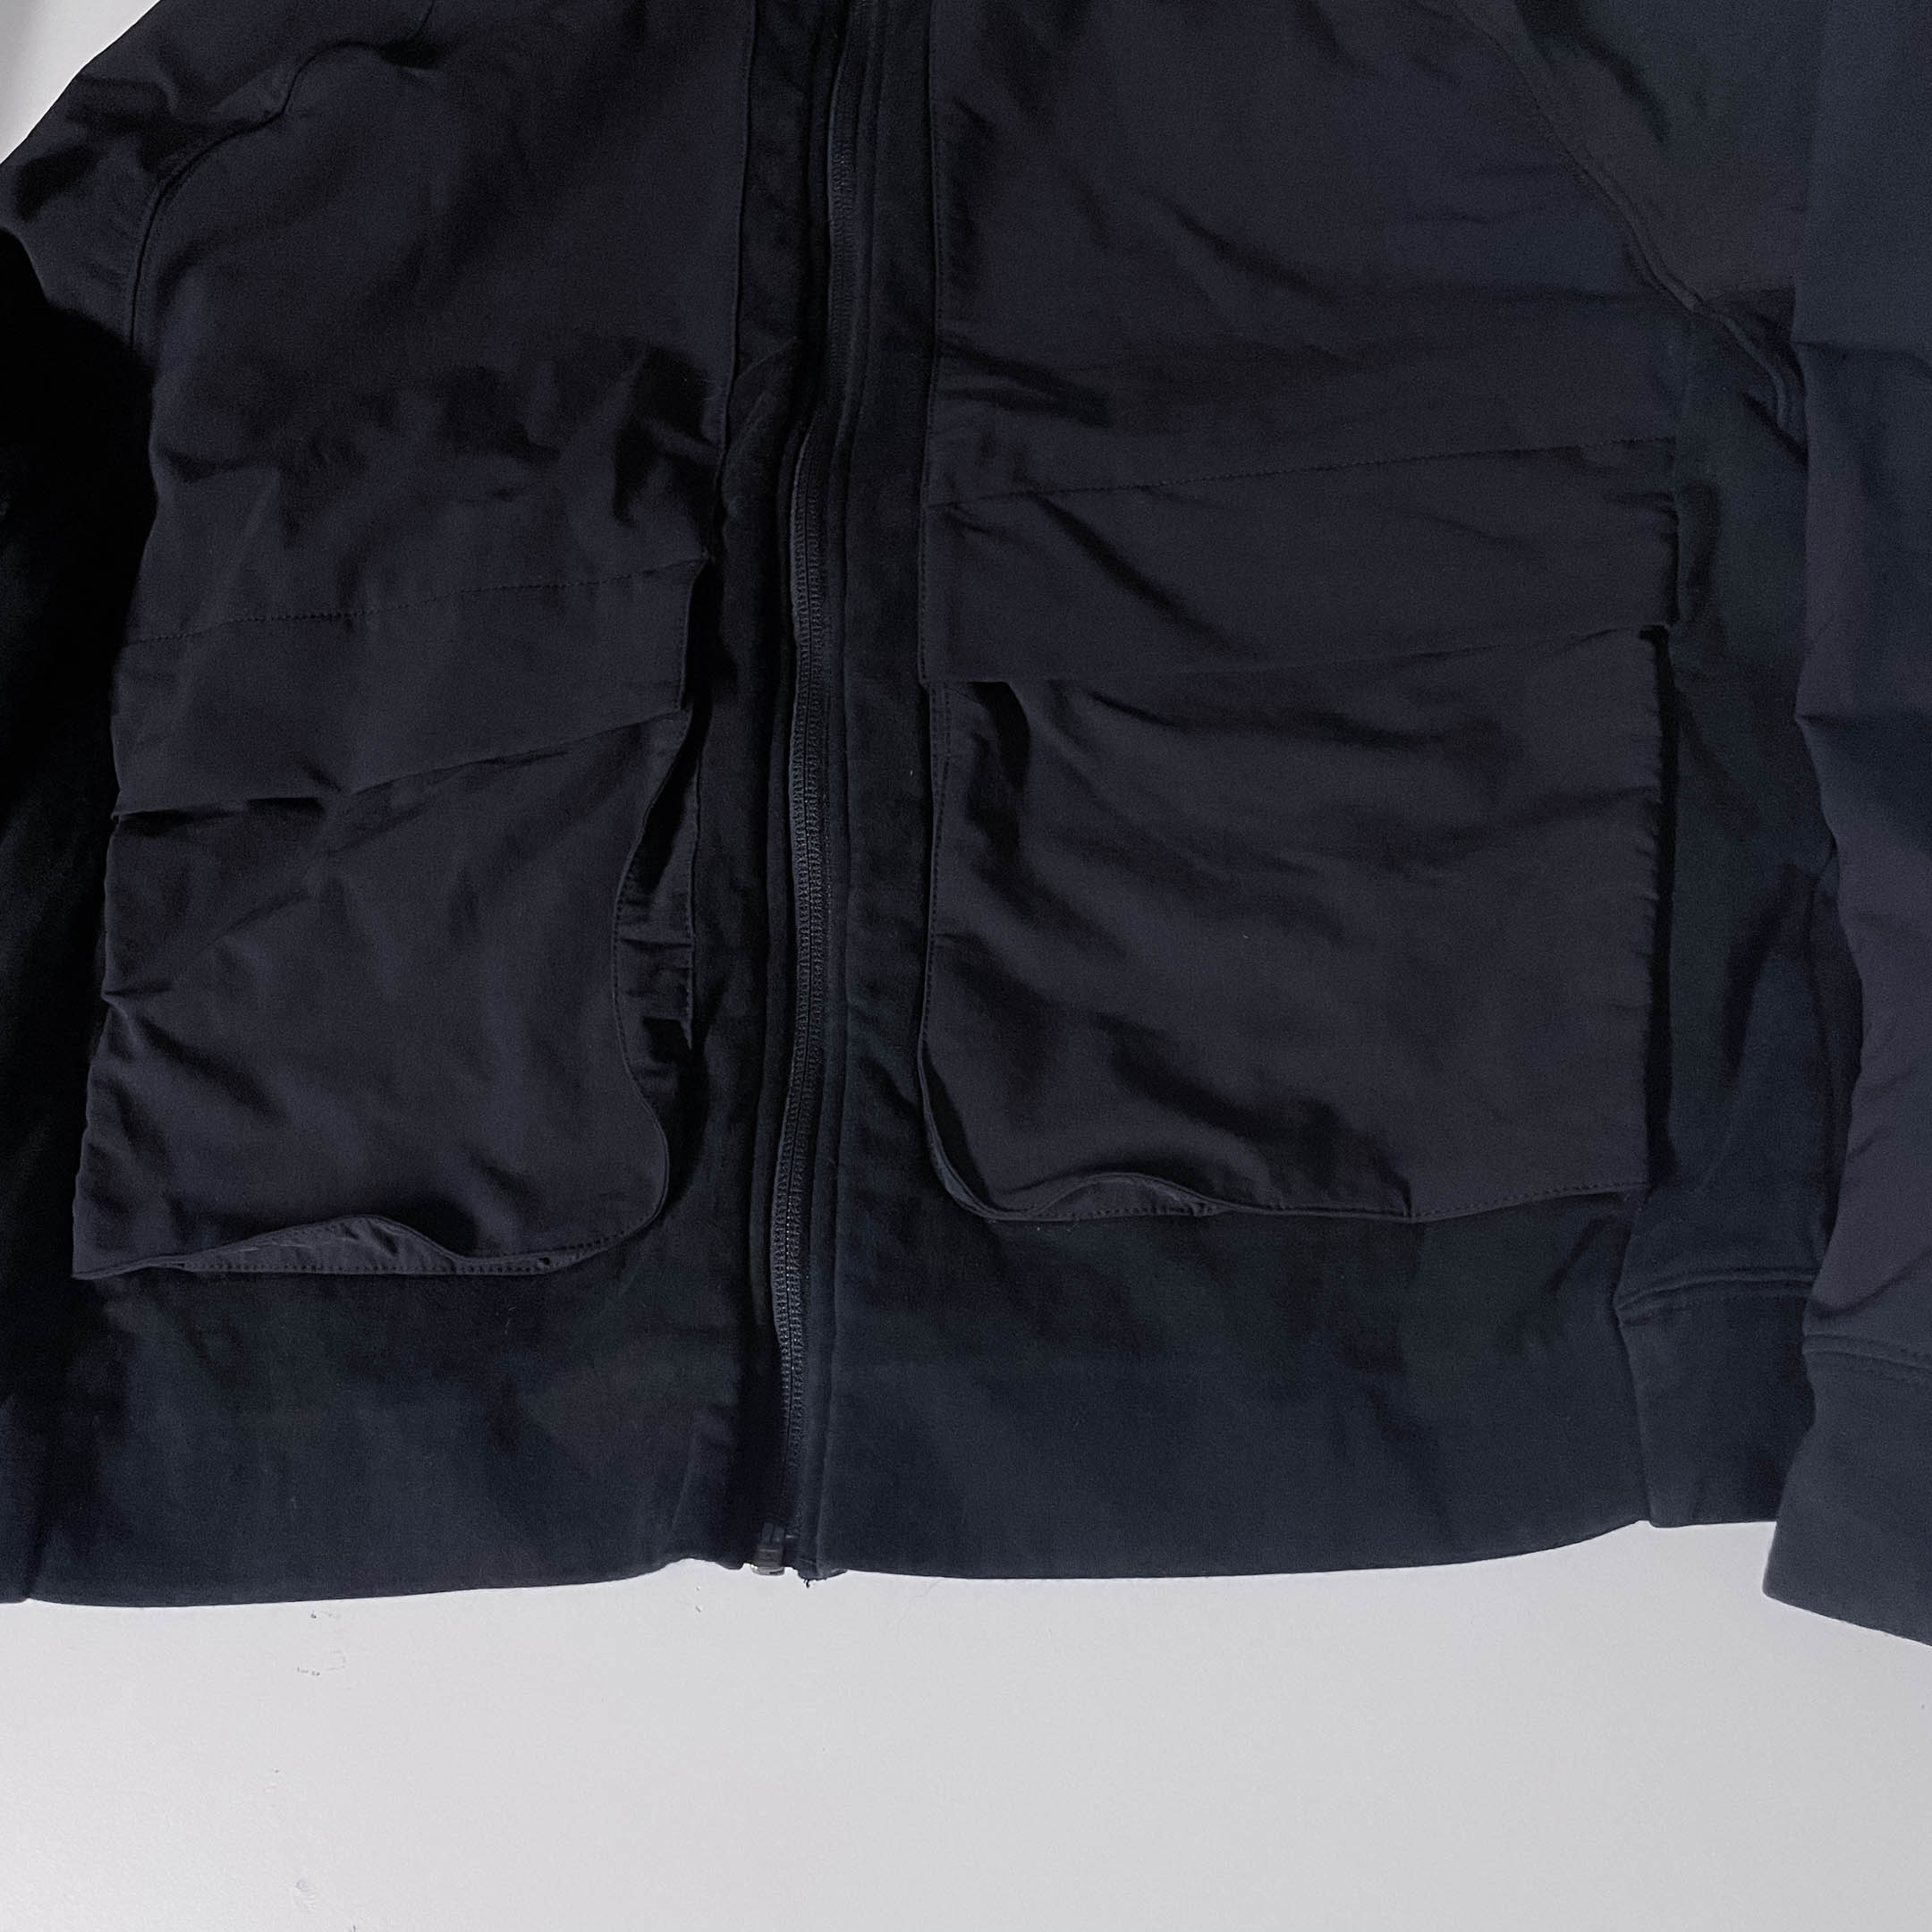 Vintage black Reebok united by fitness small full zip up winter jacket